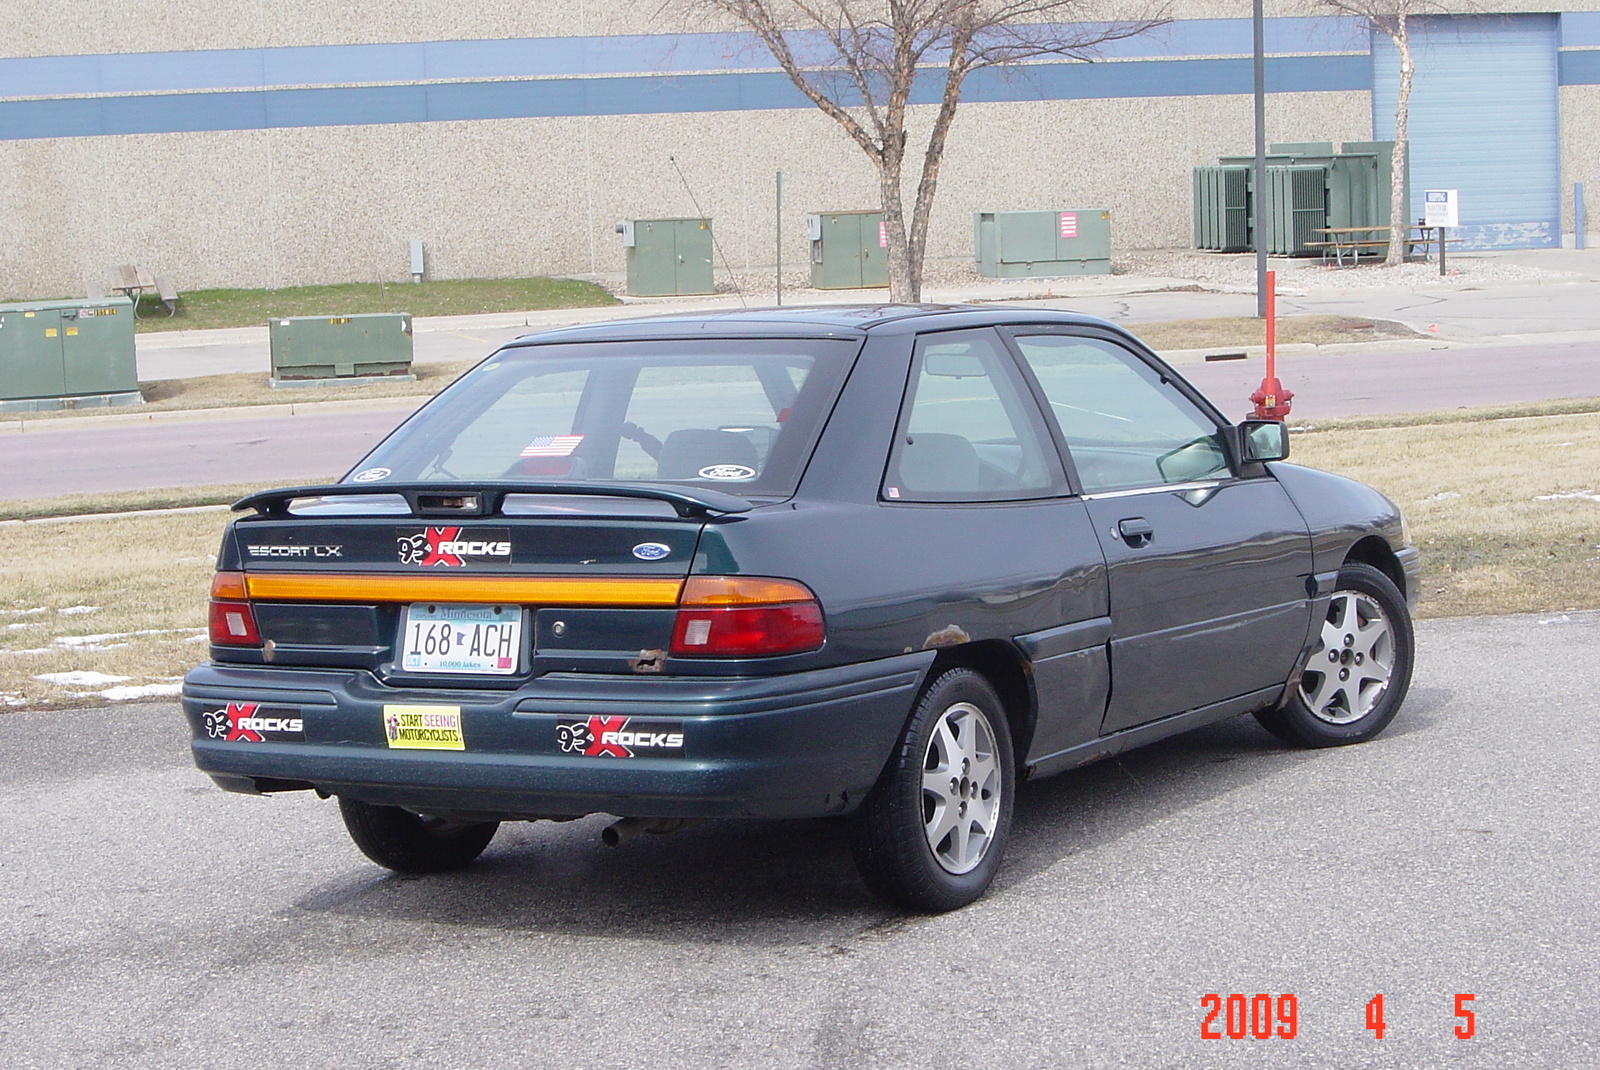 1995 Ford escort lx hatchback review #6